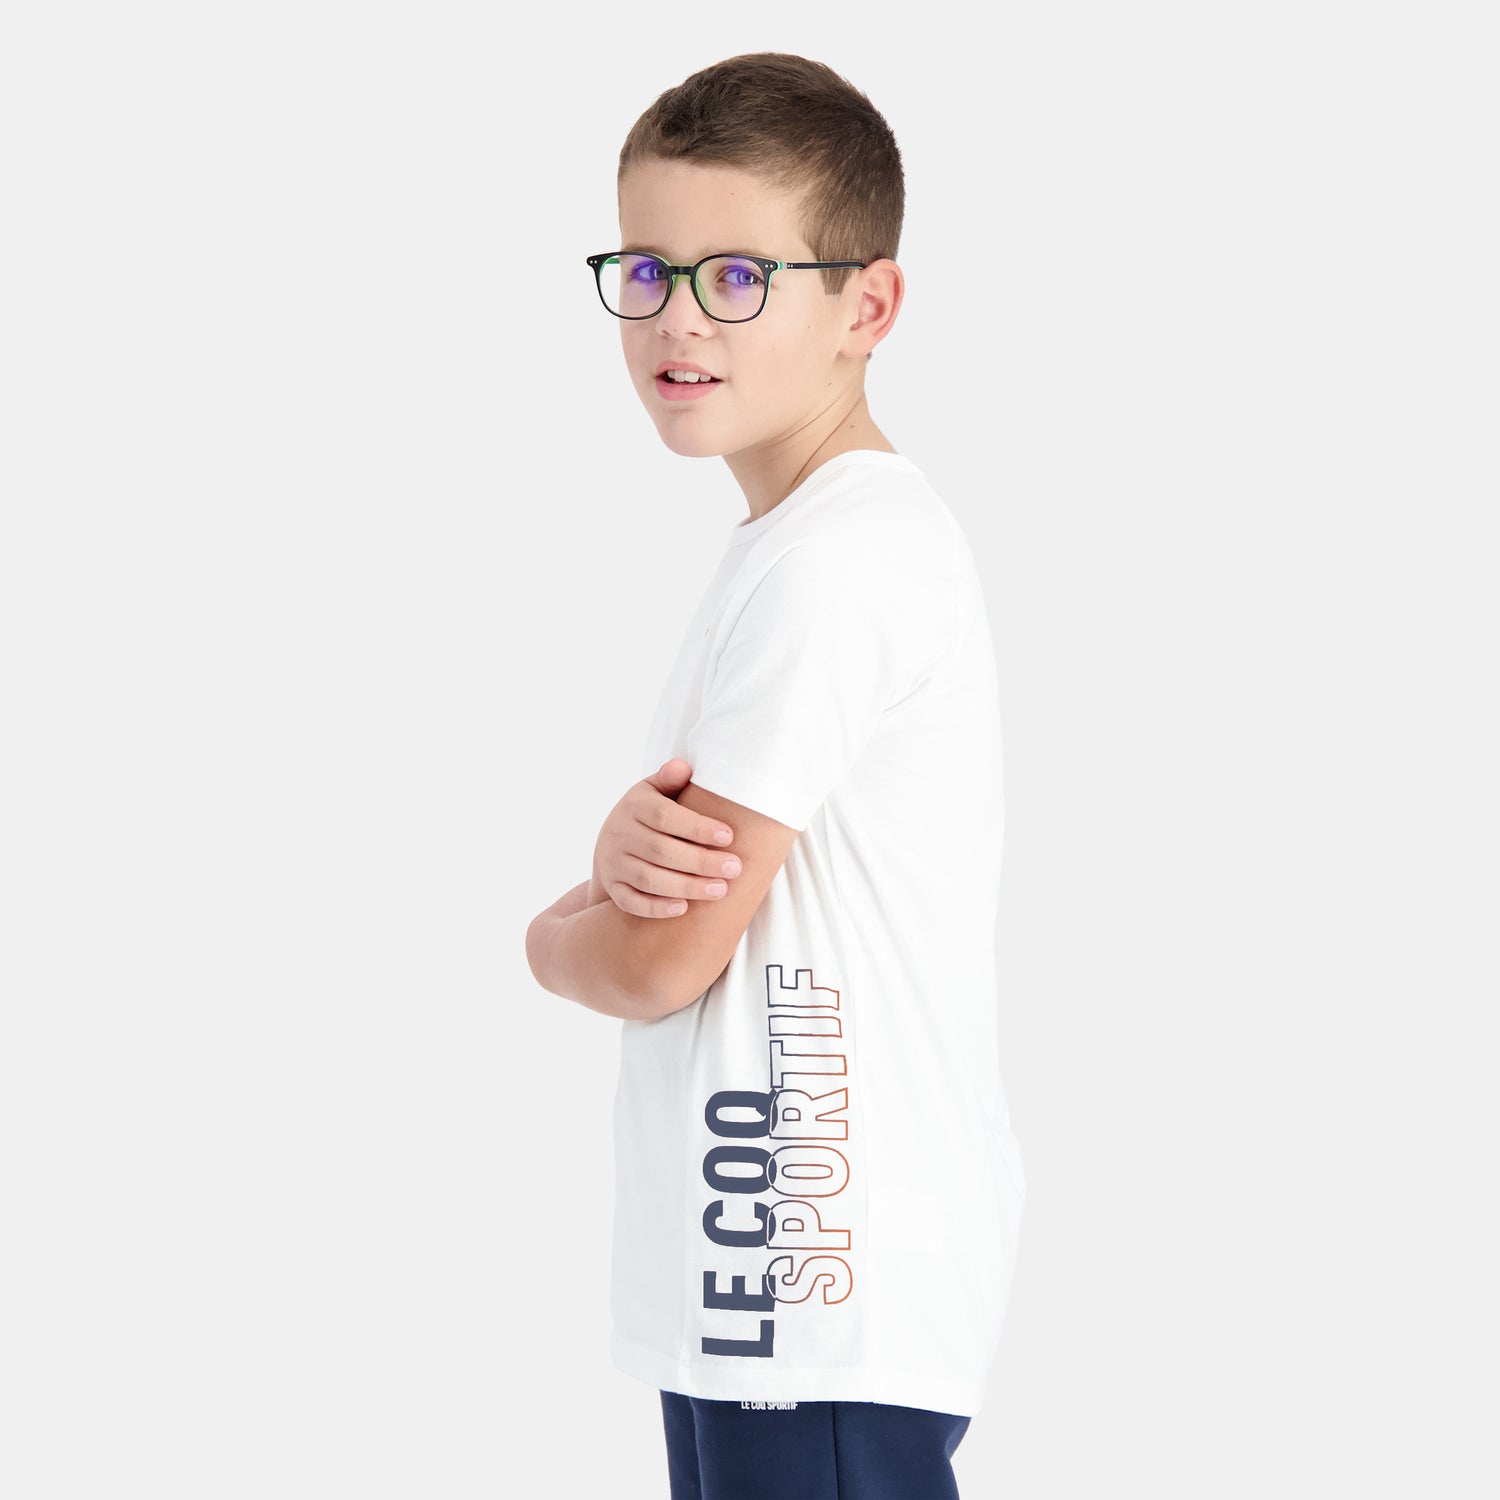 2410126-SAISON 2 Tee SS N°1 Enfant new optical w  | T-Shirt für Kinder